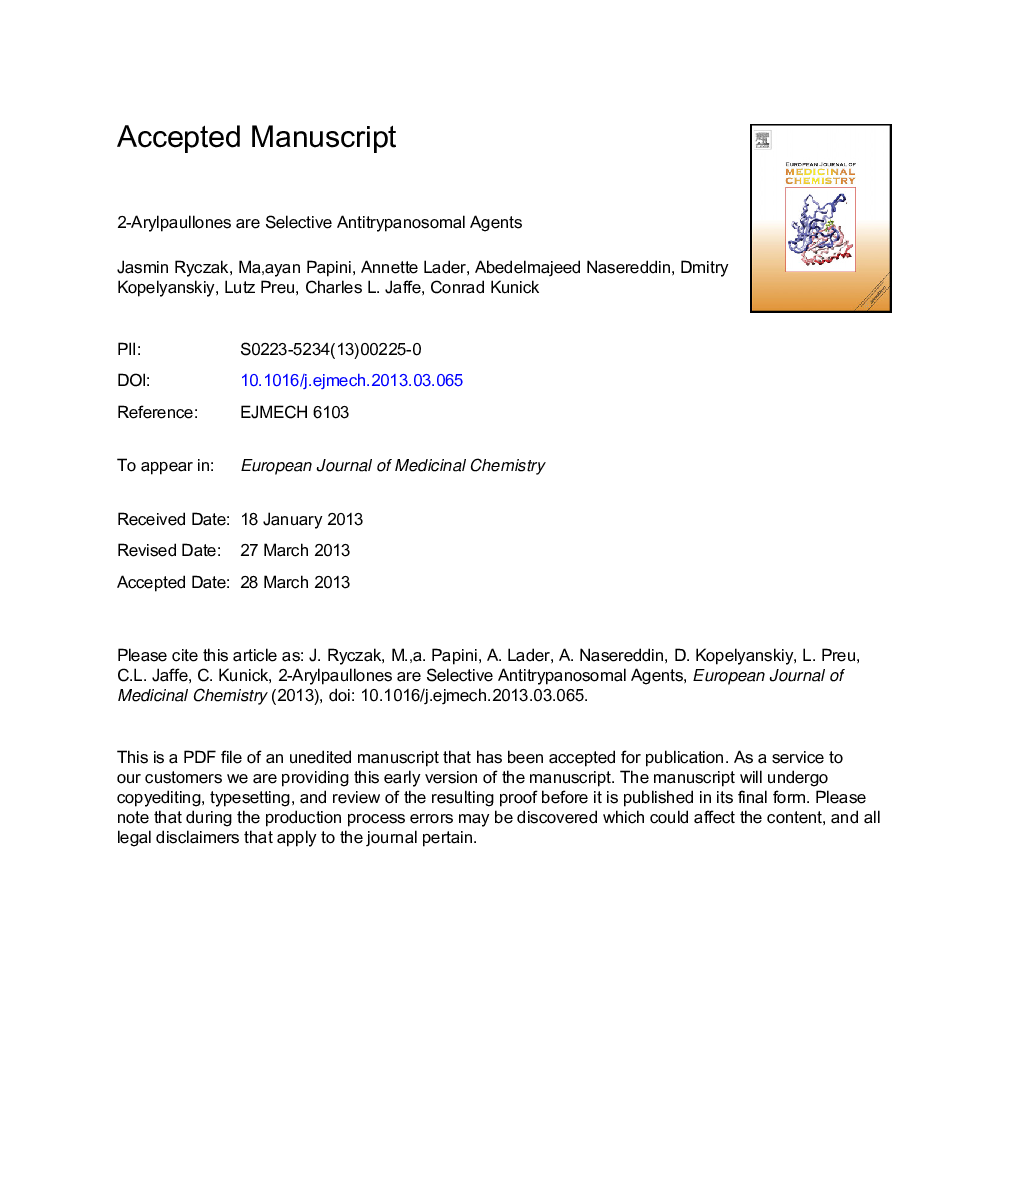 2-Arylpaullones are selective antitrypanosomal agents